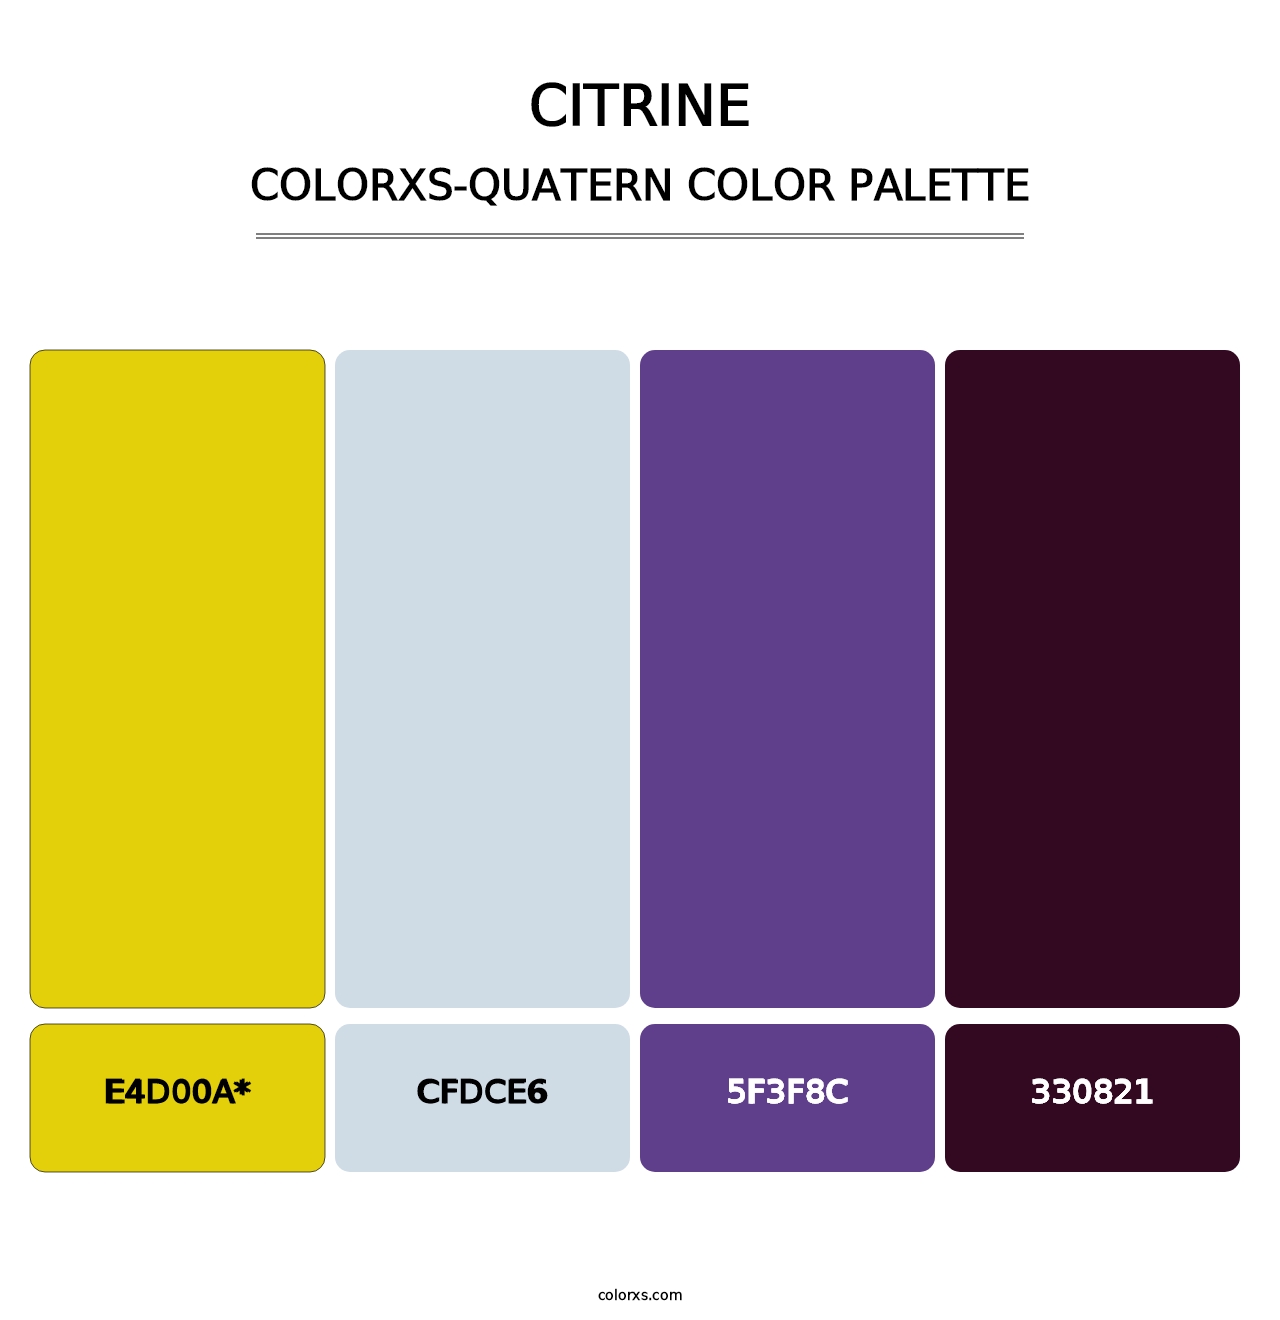 Citrine - Colorxs Quatern Palette